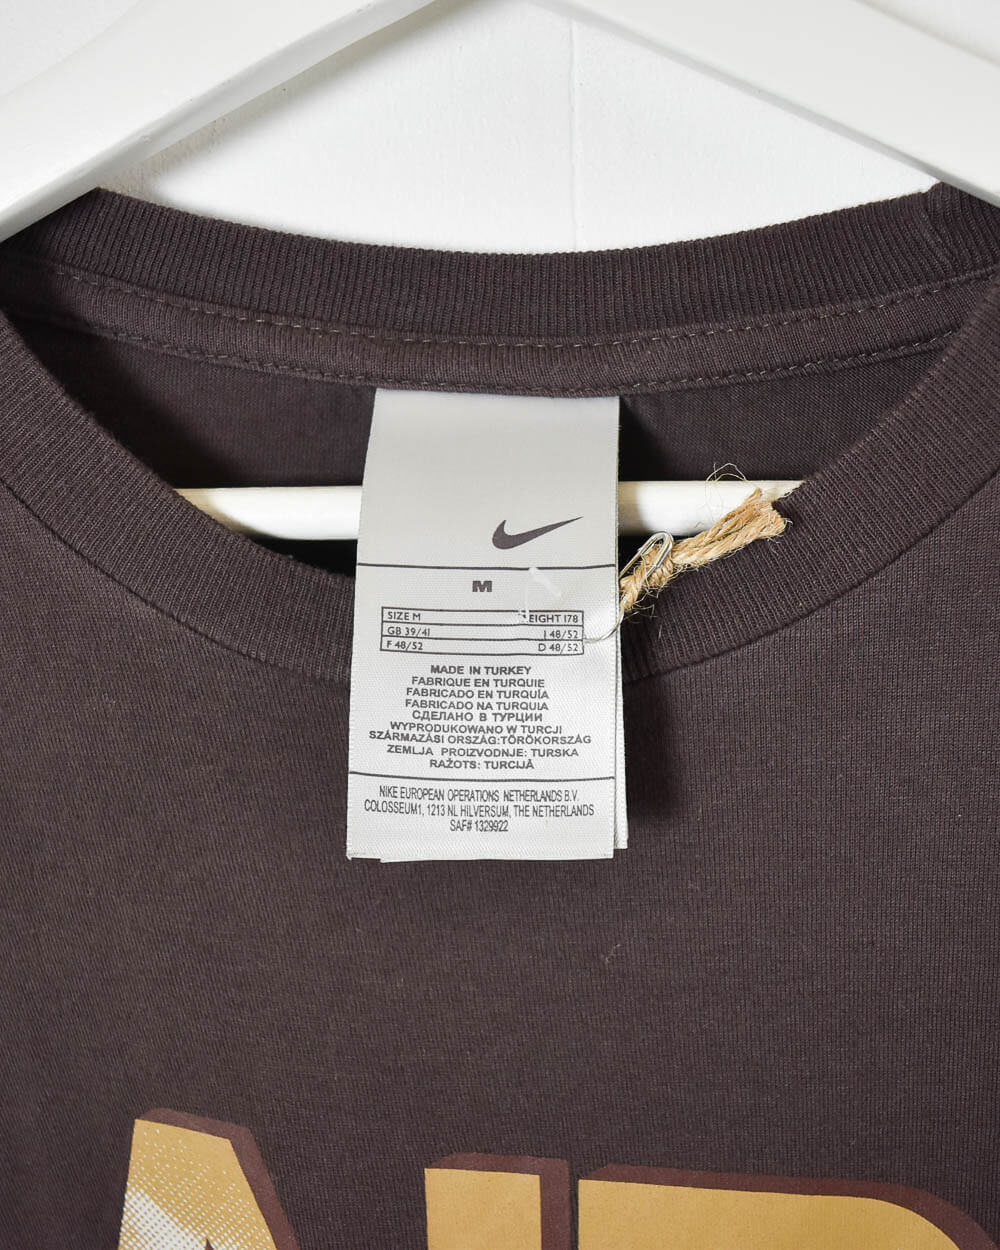 Brown Nike Air T-Shirt - Medium